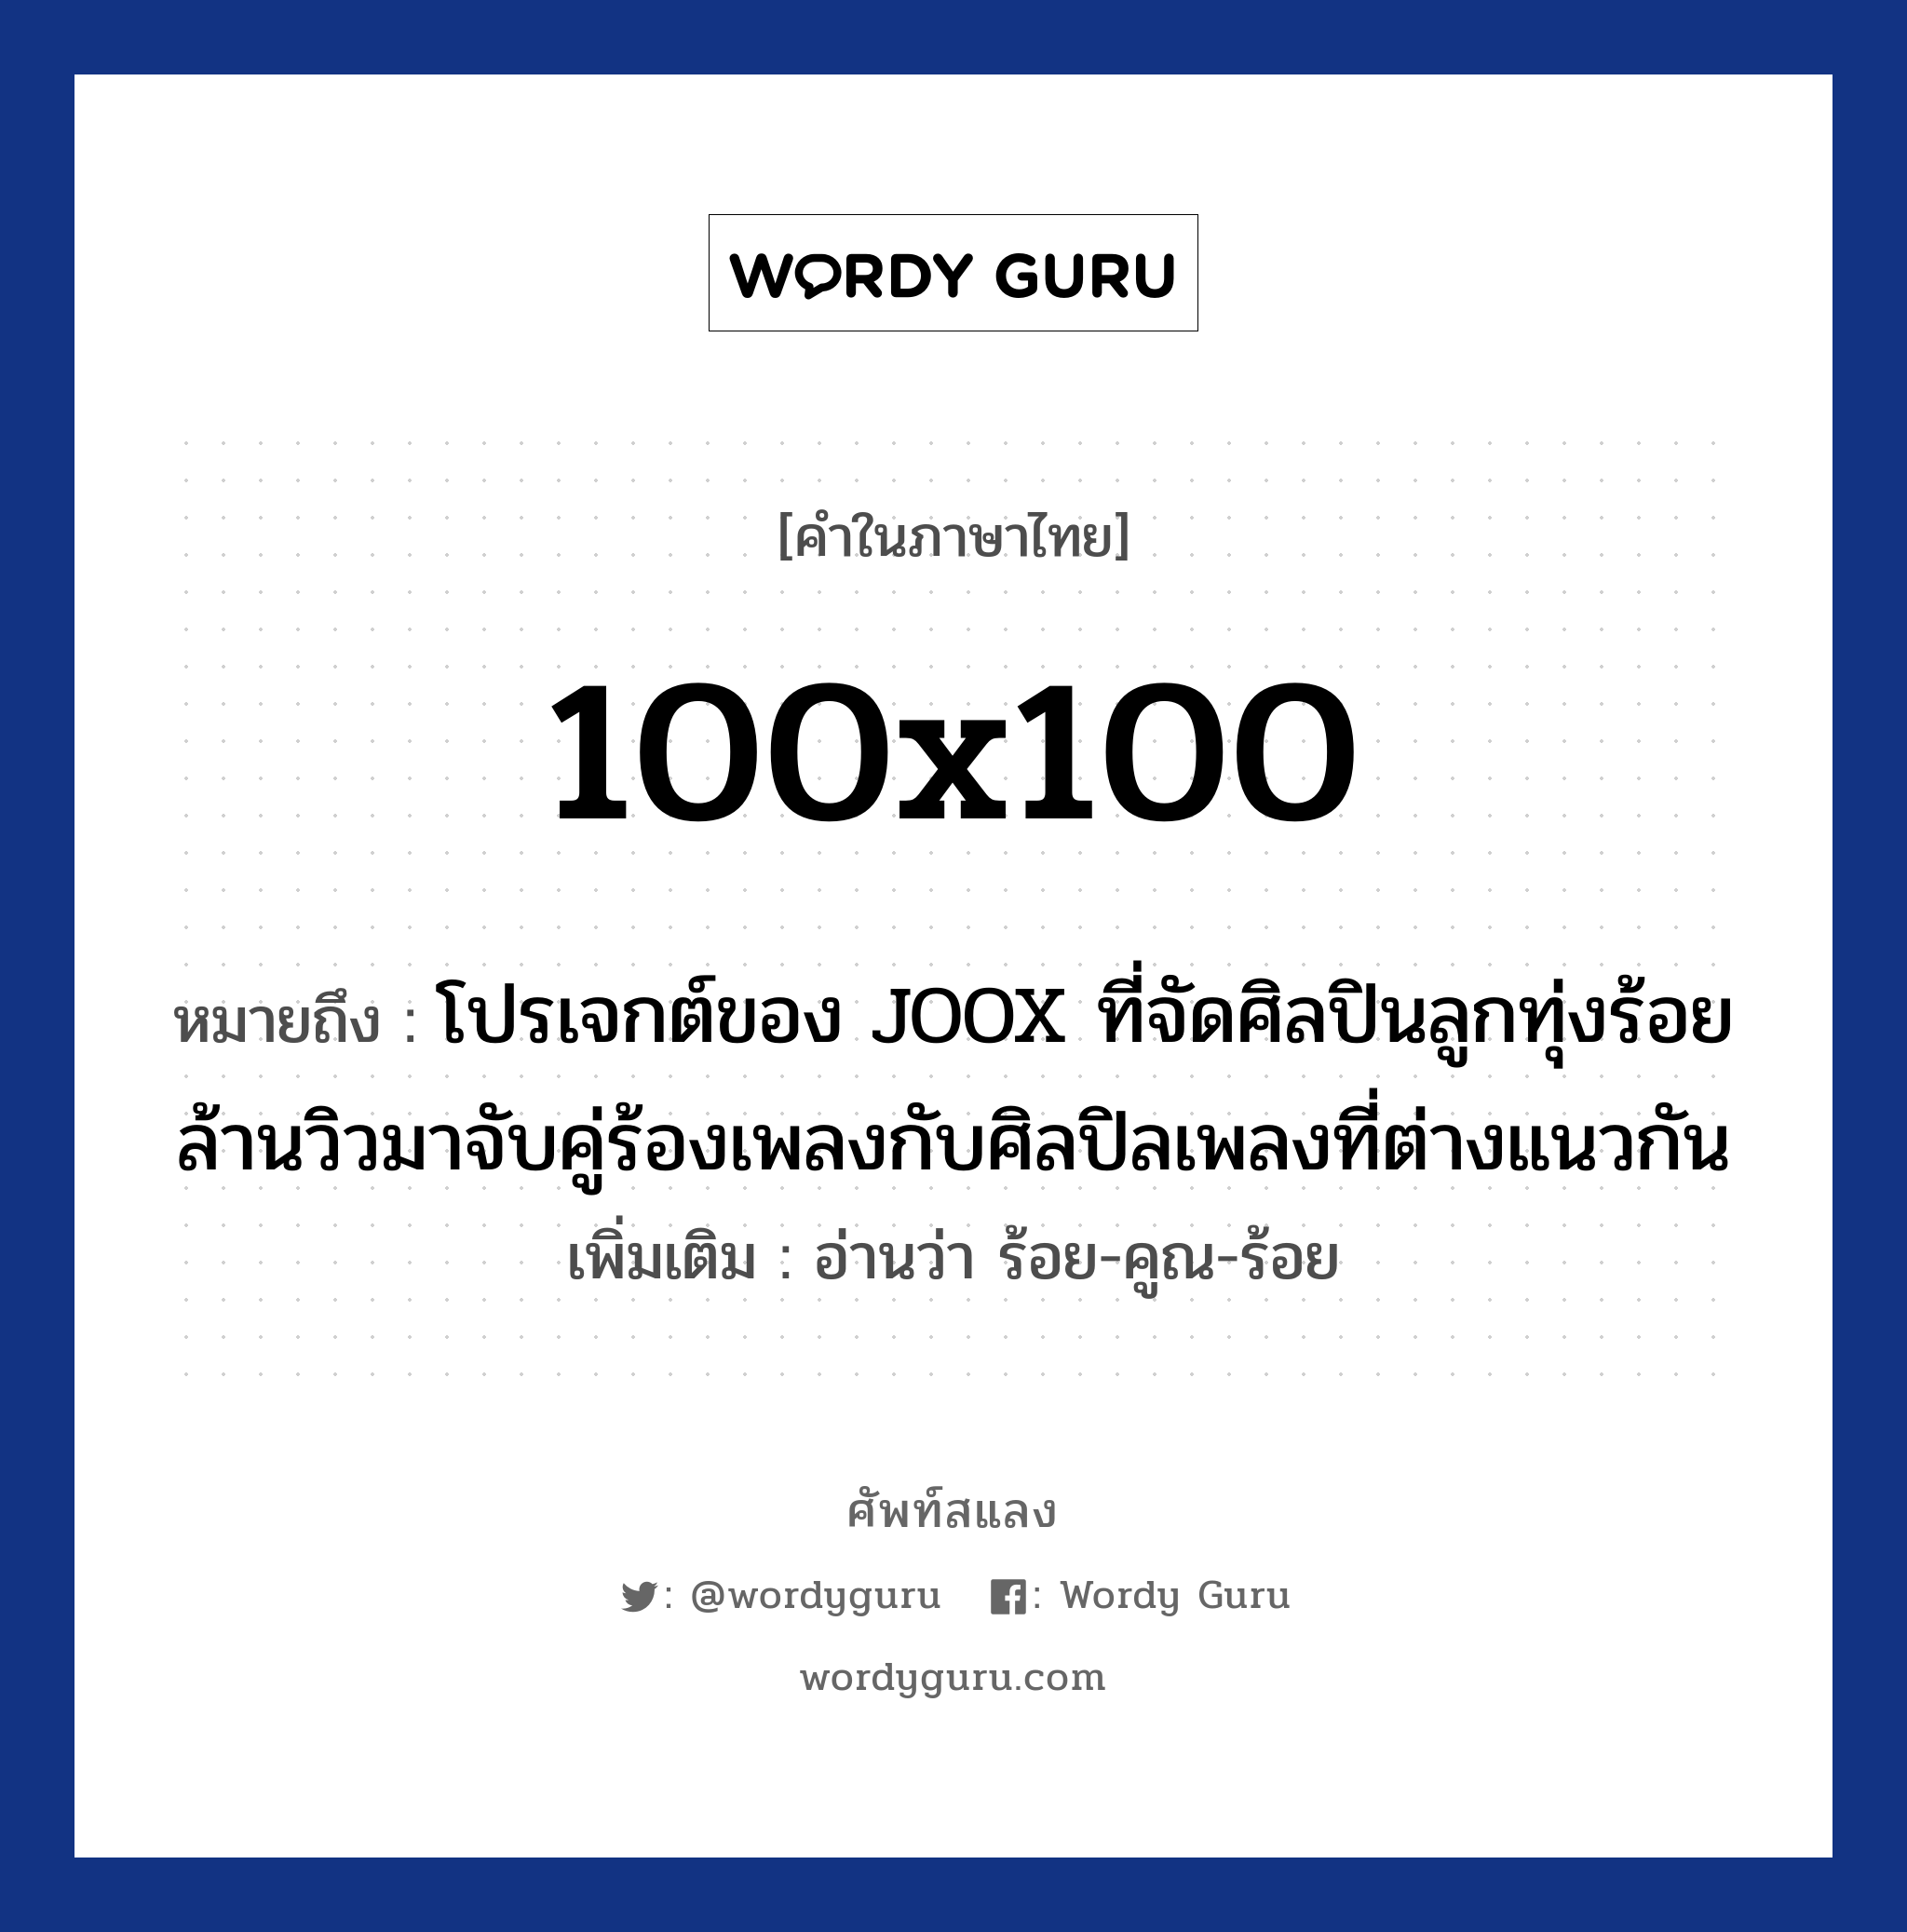 100x100 หมายถึงอะไร?, คำไทย 100x100 คำในภาษาไทย 100x100 หมายถึง โปรเจกต์ของ JOOX ที่จัดศิลปินลูกทุ่งร้อยล้านวิวมาจับคู่ร้องเพลงกับศิลปิลเพลงที่ต่างแนวกัน เพิ่มเติม อ่านว่า ร้อย-คูณ-ร้อย